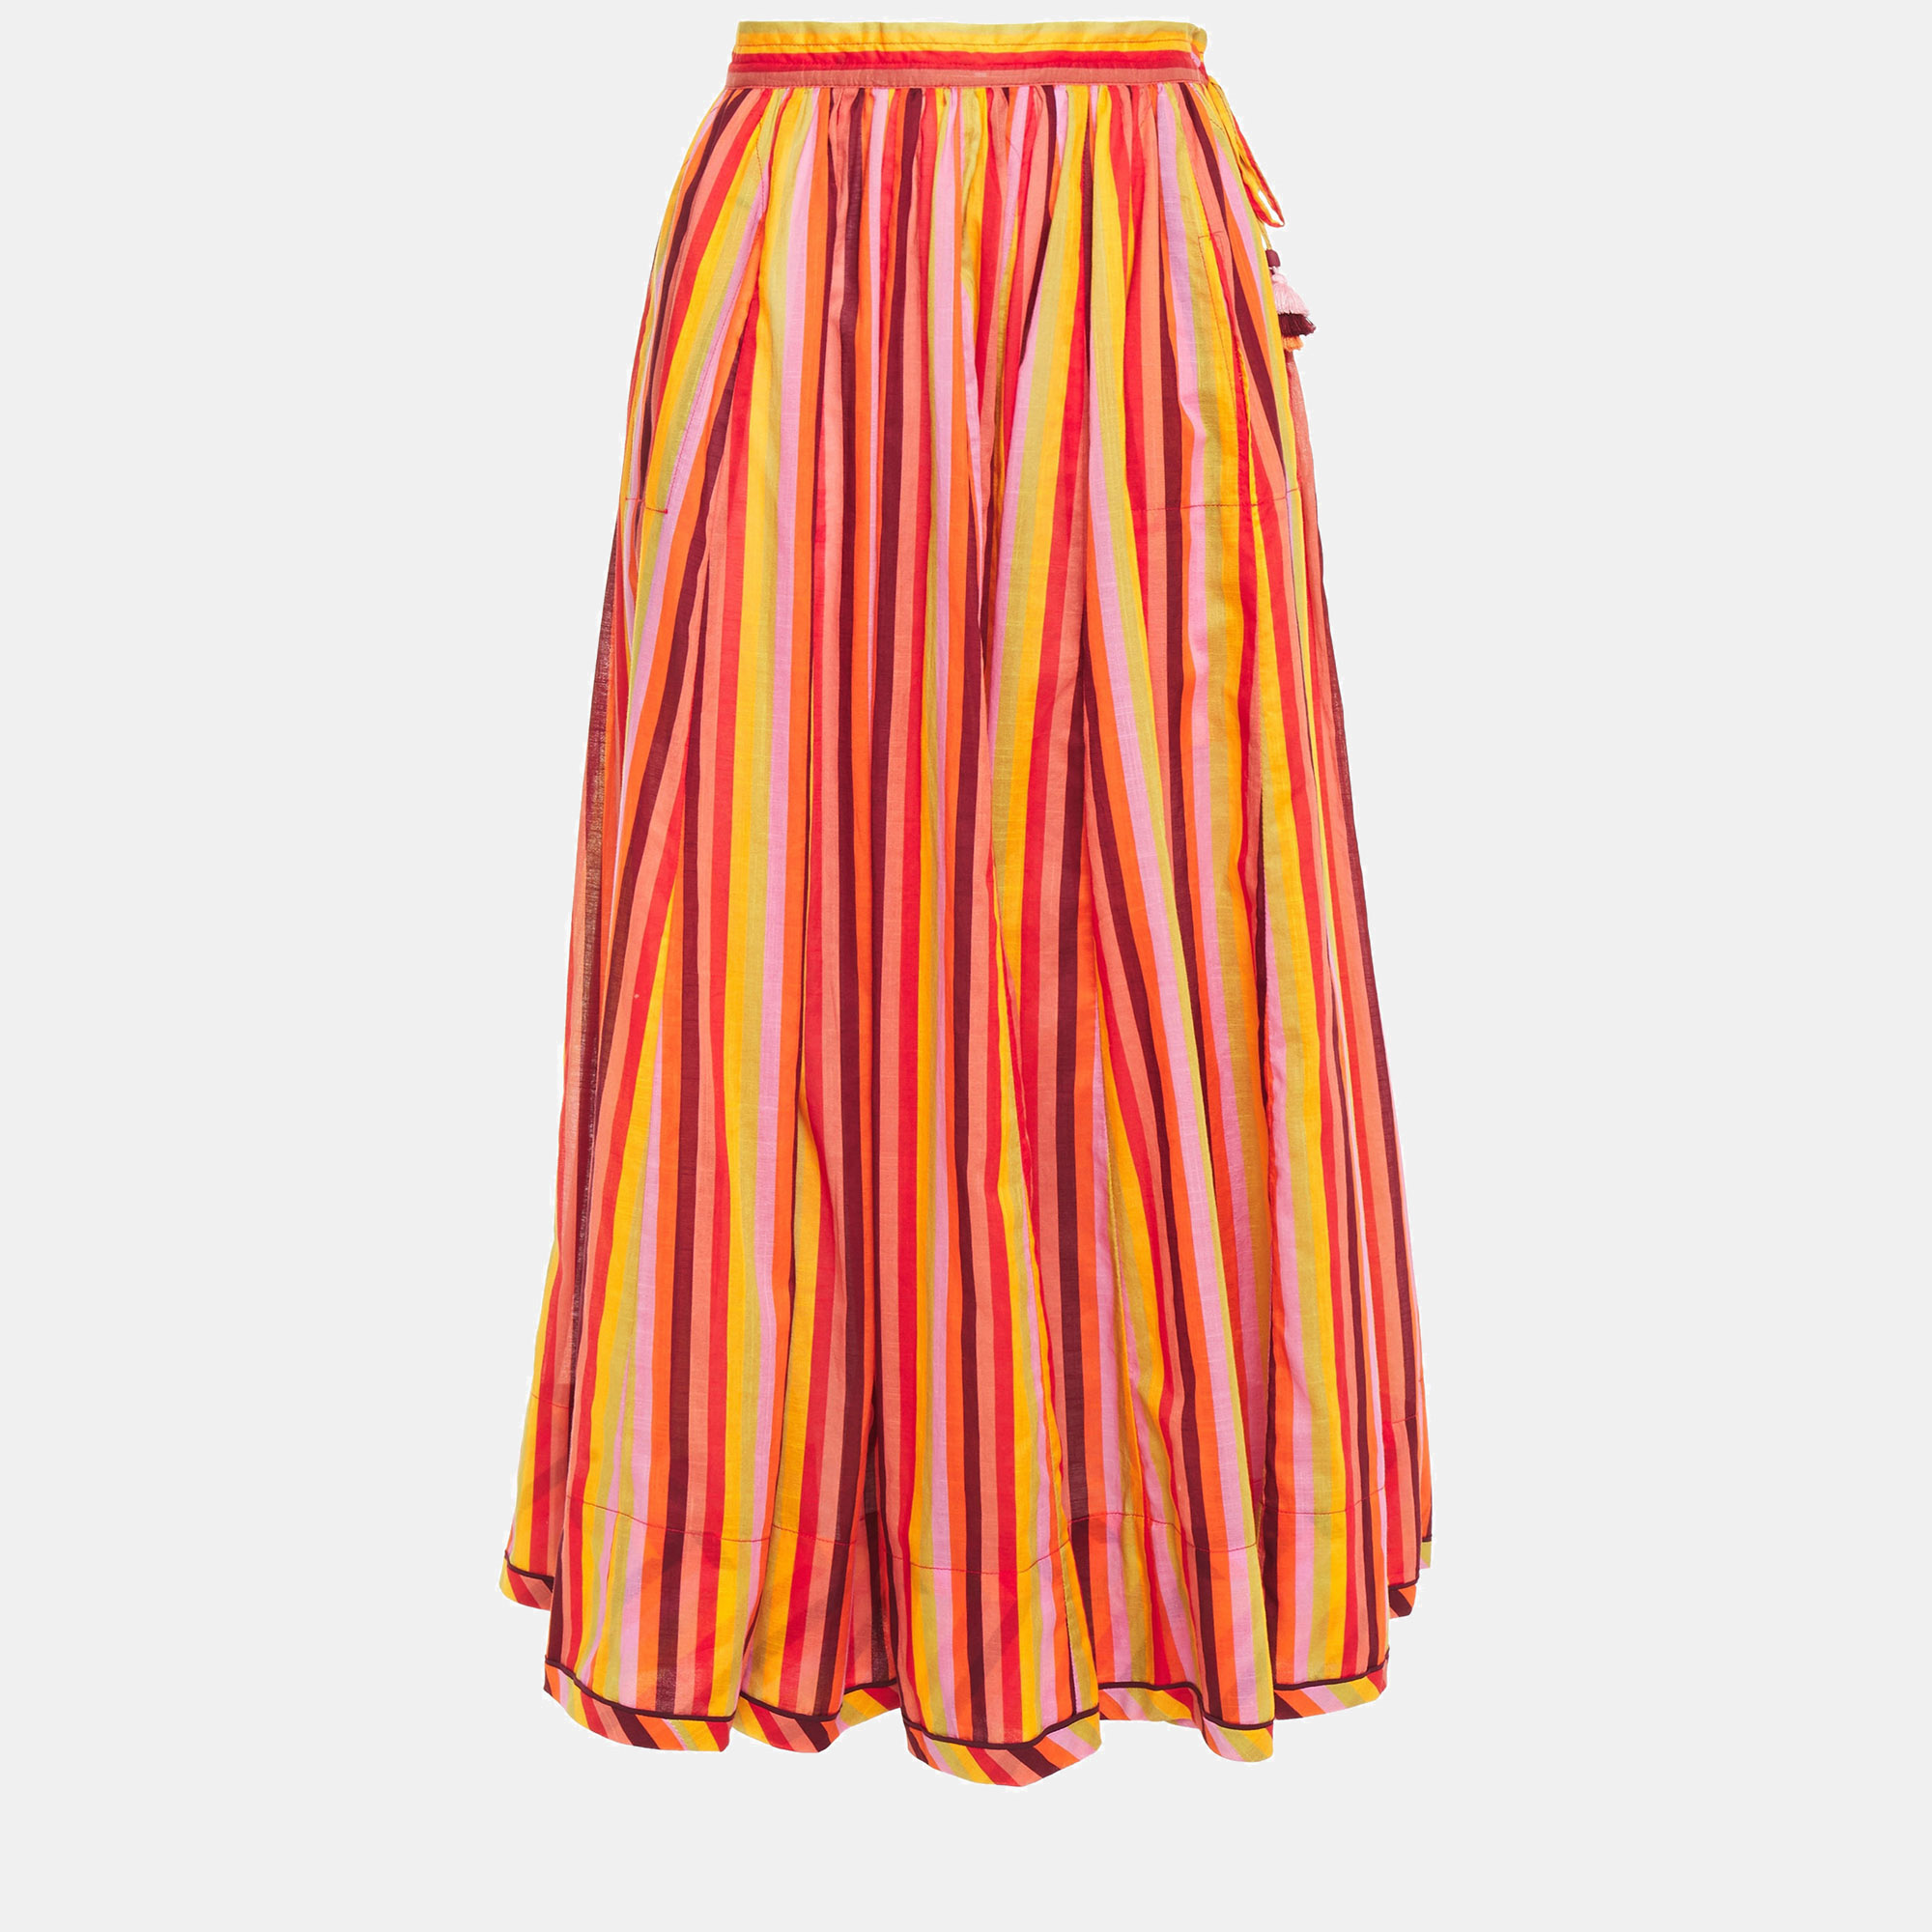 Zimmermann multicolor striped cotton midi skirt size s (1)